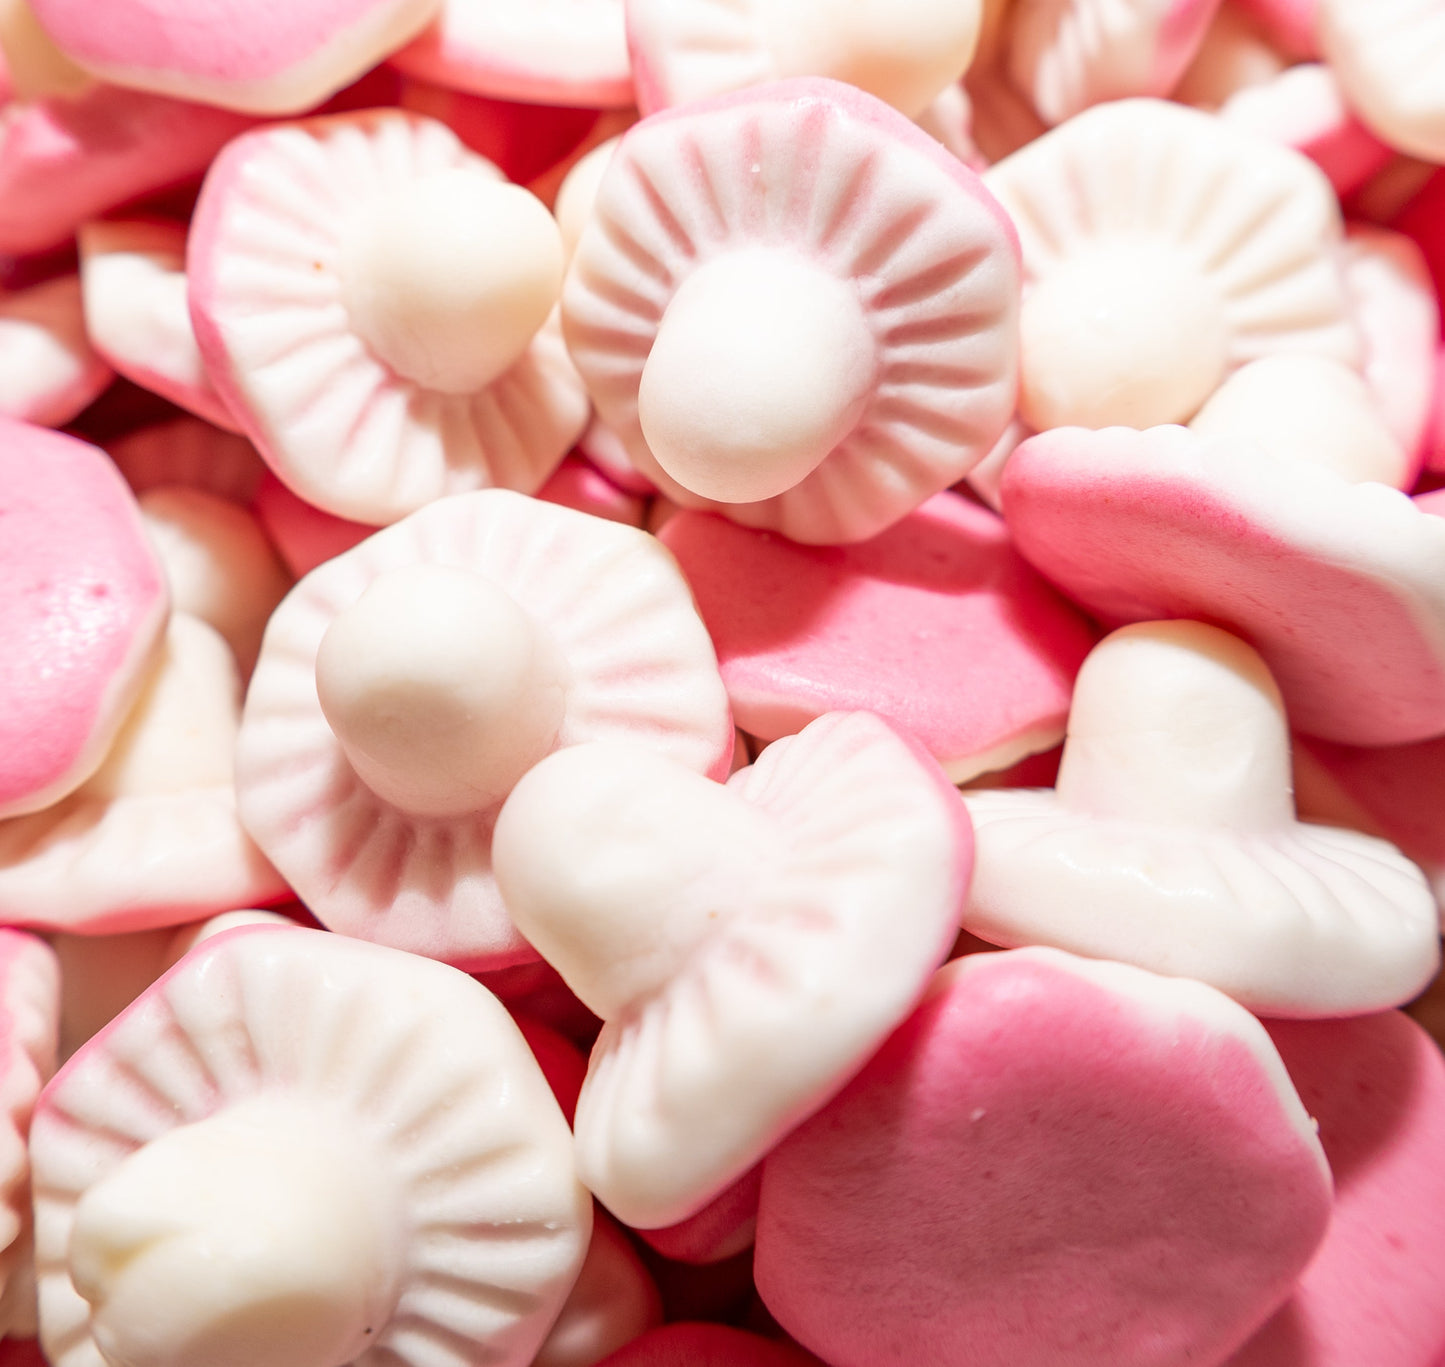 Candy Jars Ciara's Candy Store Mushrooms 